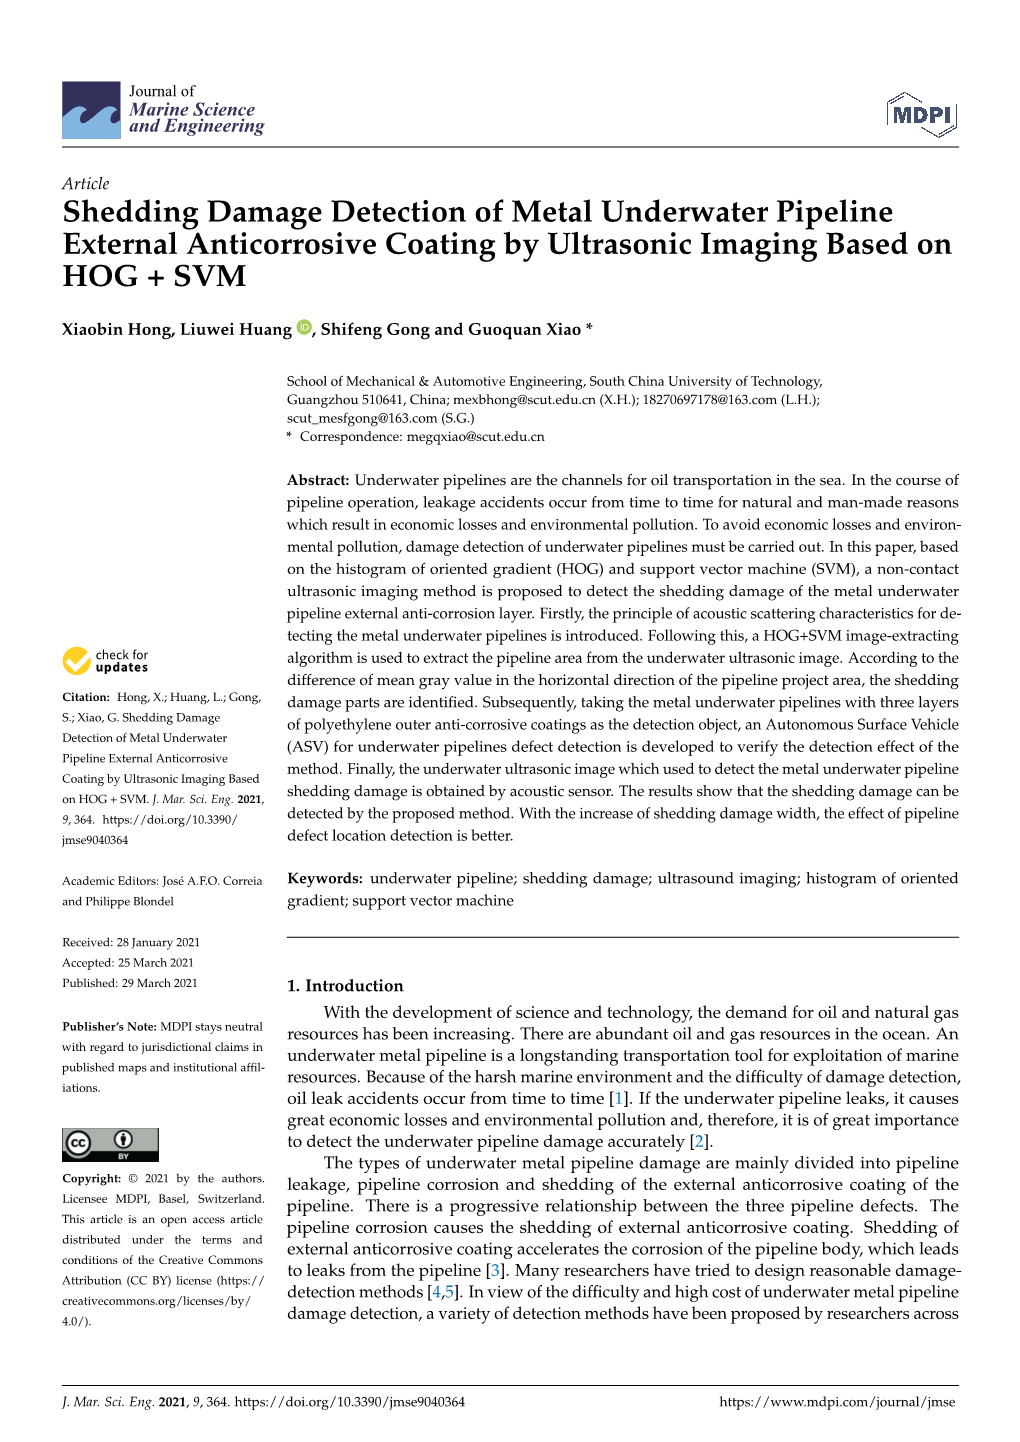 Shedding Damage Detection of Metal Underwater Pipeline External Anticorrosive Coating by Ultrasonic Imaging Based on HOG + SVM